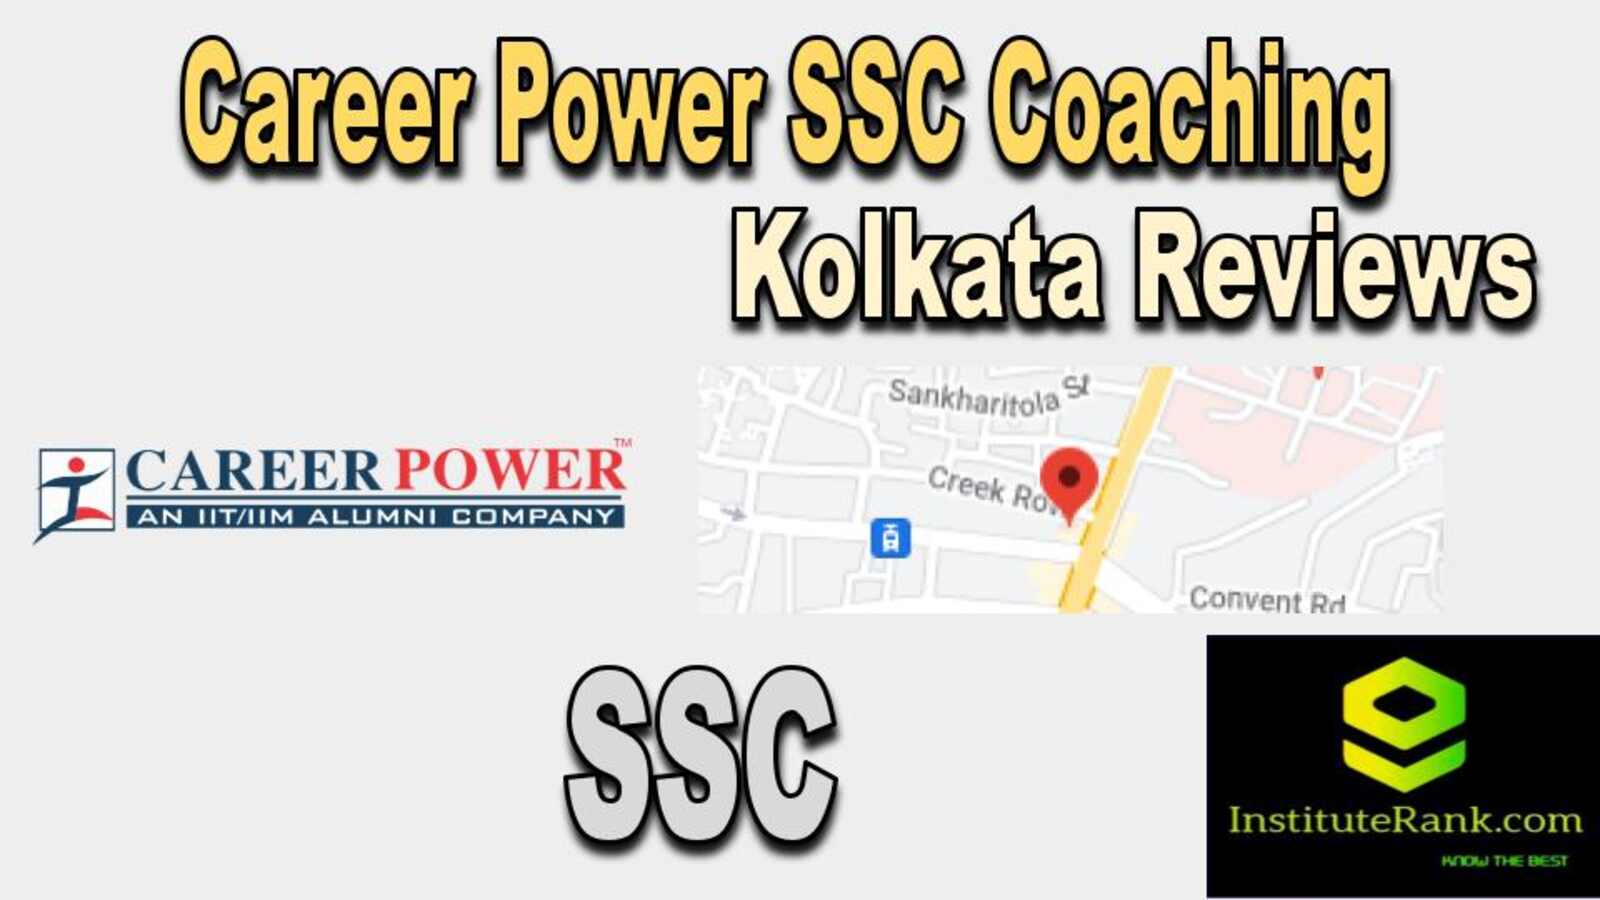 SSC Coaching in Kolkata